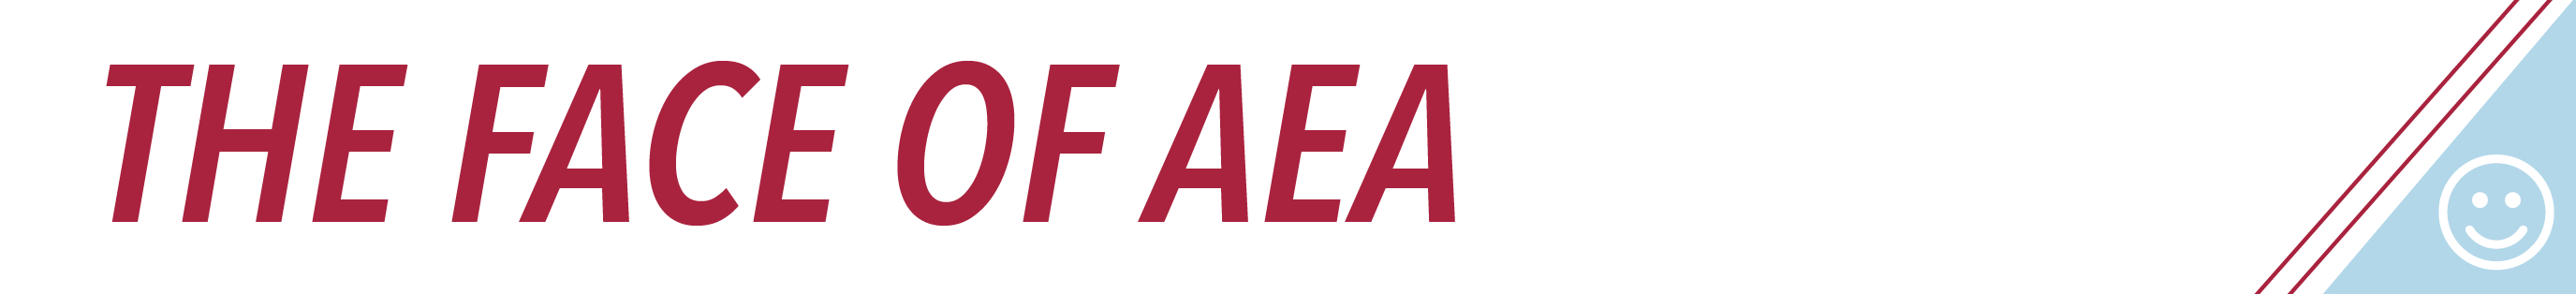 AEA News Banner.png